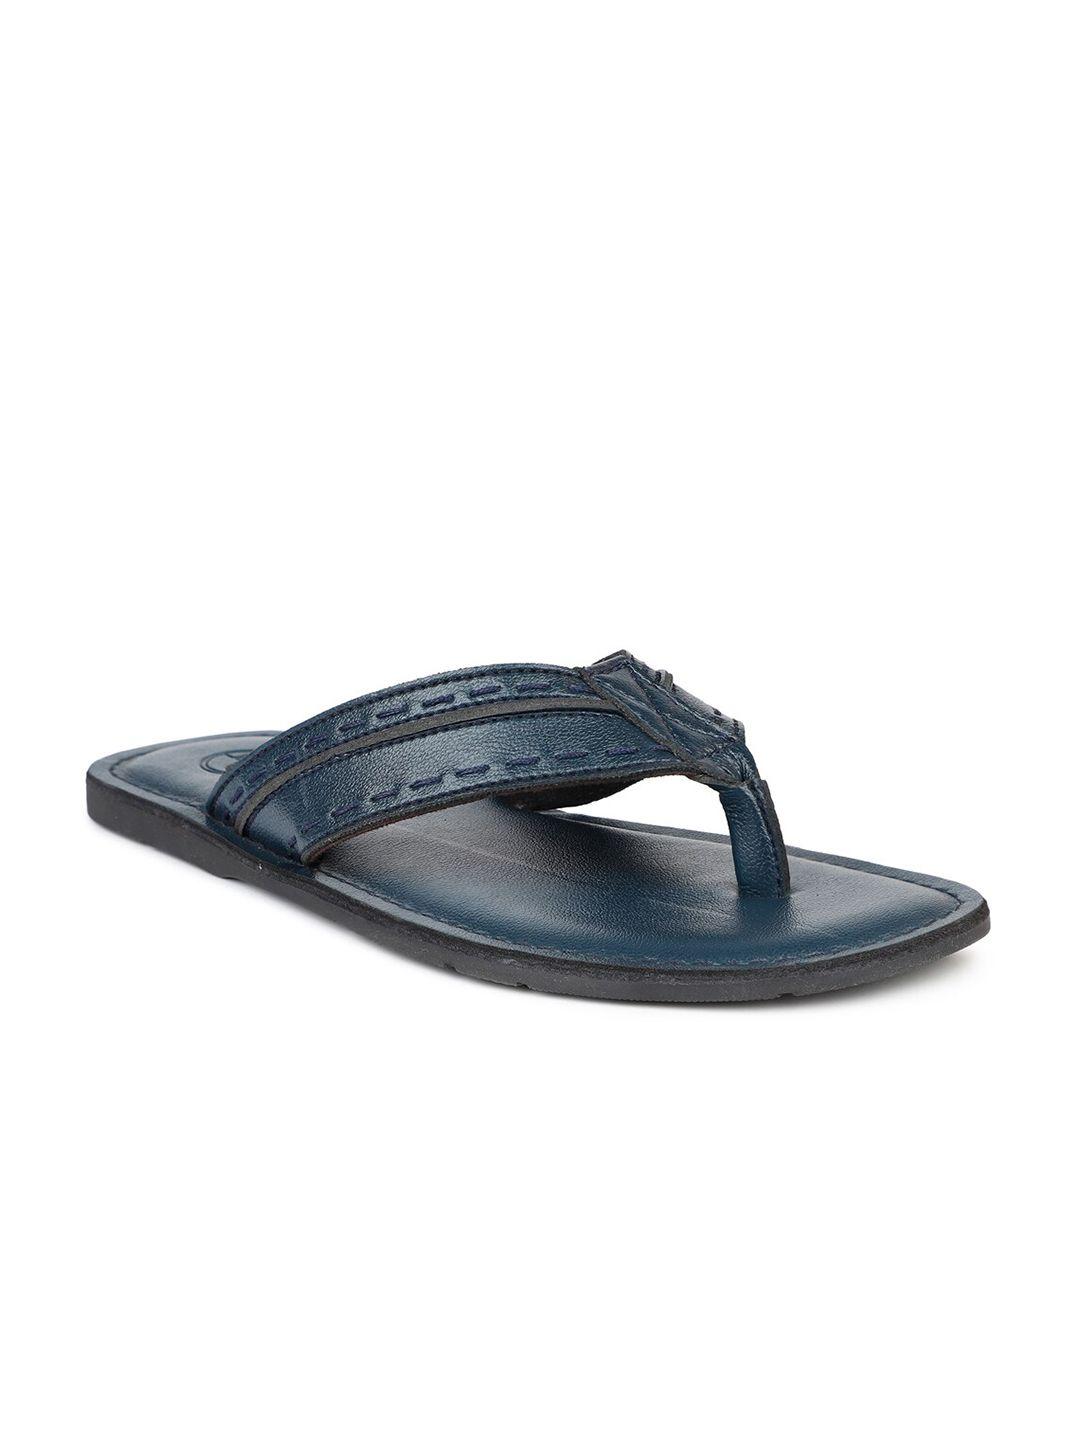 privo men blue leather comfort sandals